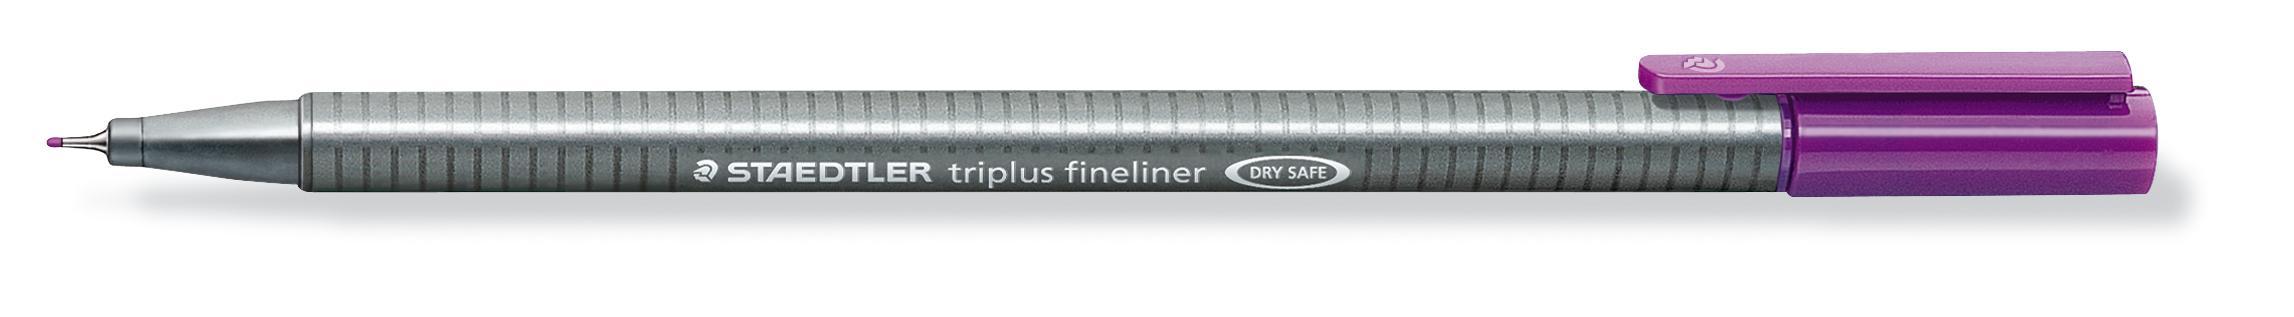 STAEDTLER Triplus Fineliner 0,3mm 334-6 violett